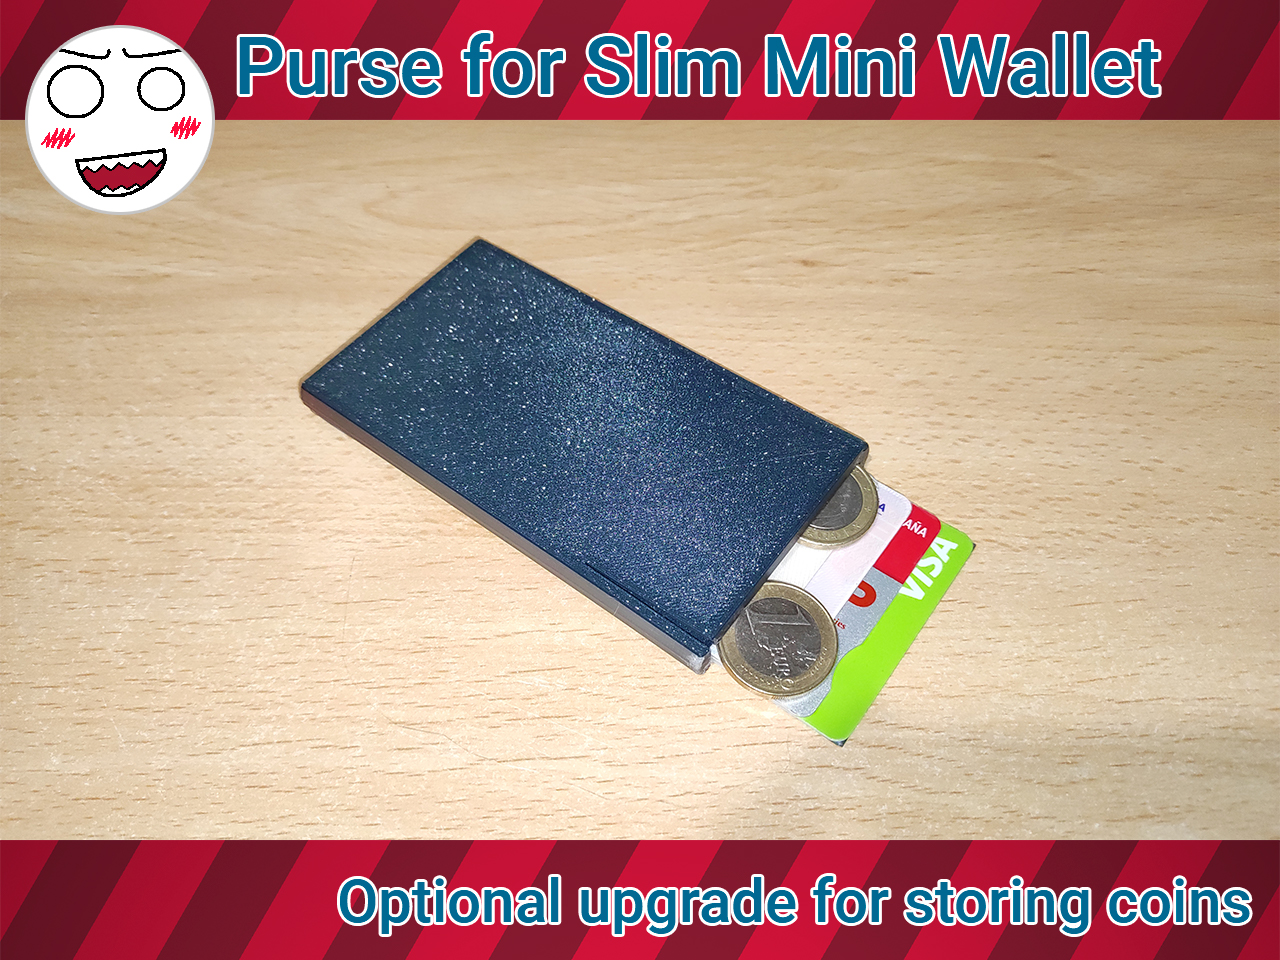 Purse for Slim Mini Wallet